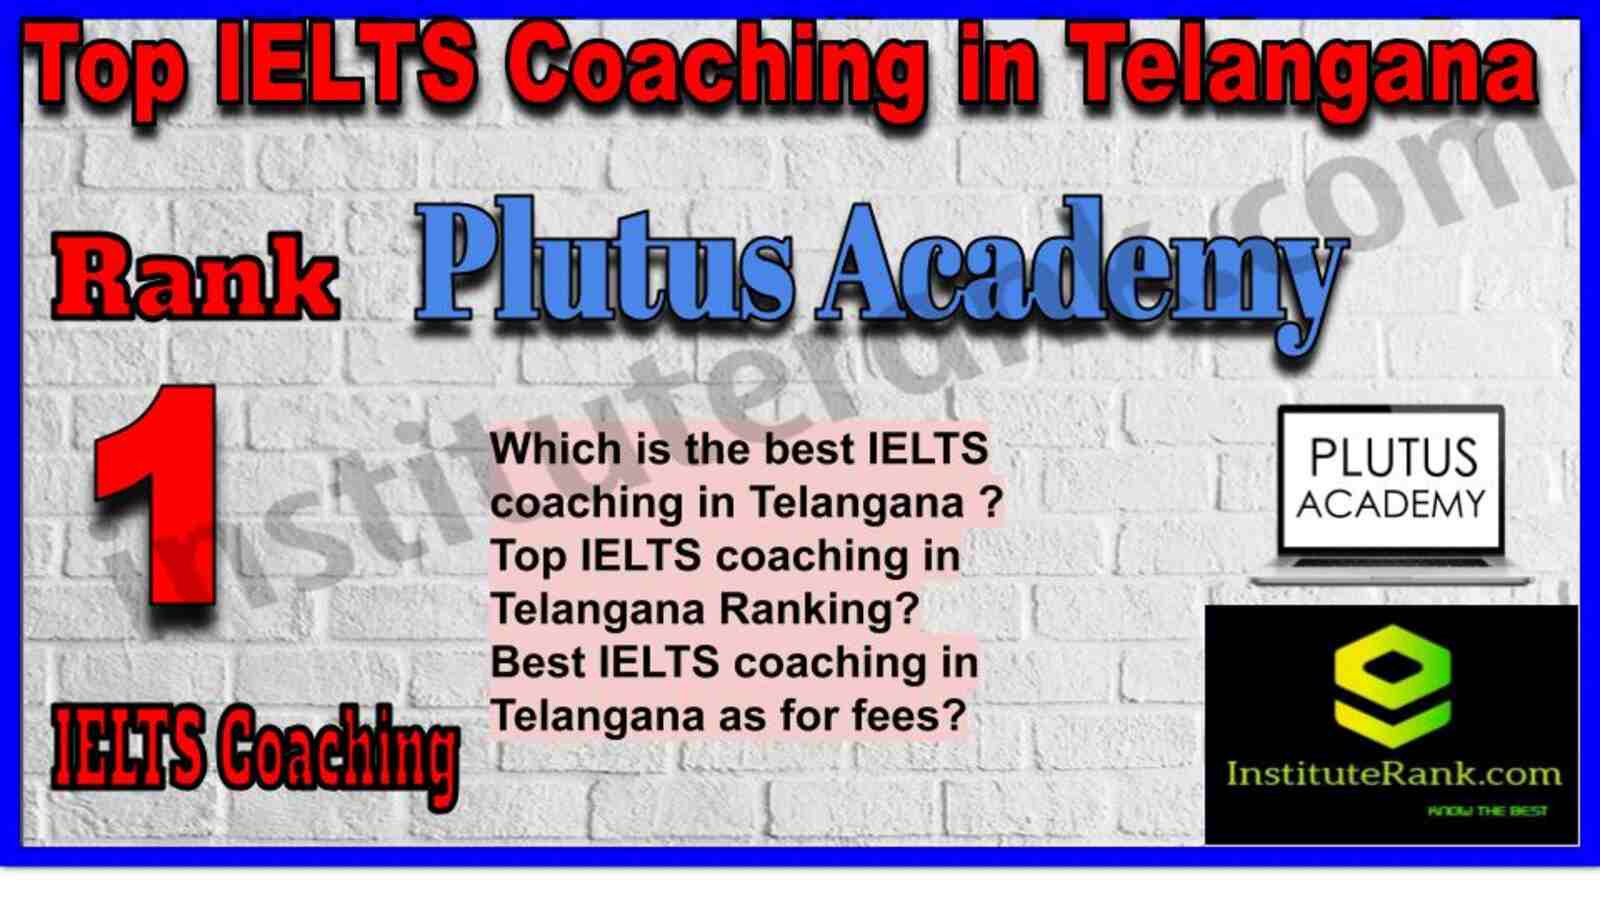 Rank 1. Plutus Academy | Best IELTS Coaching in Telangana